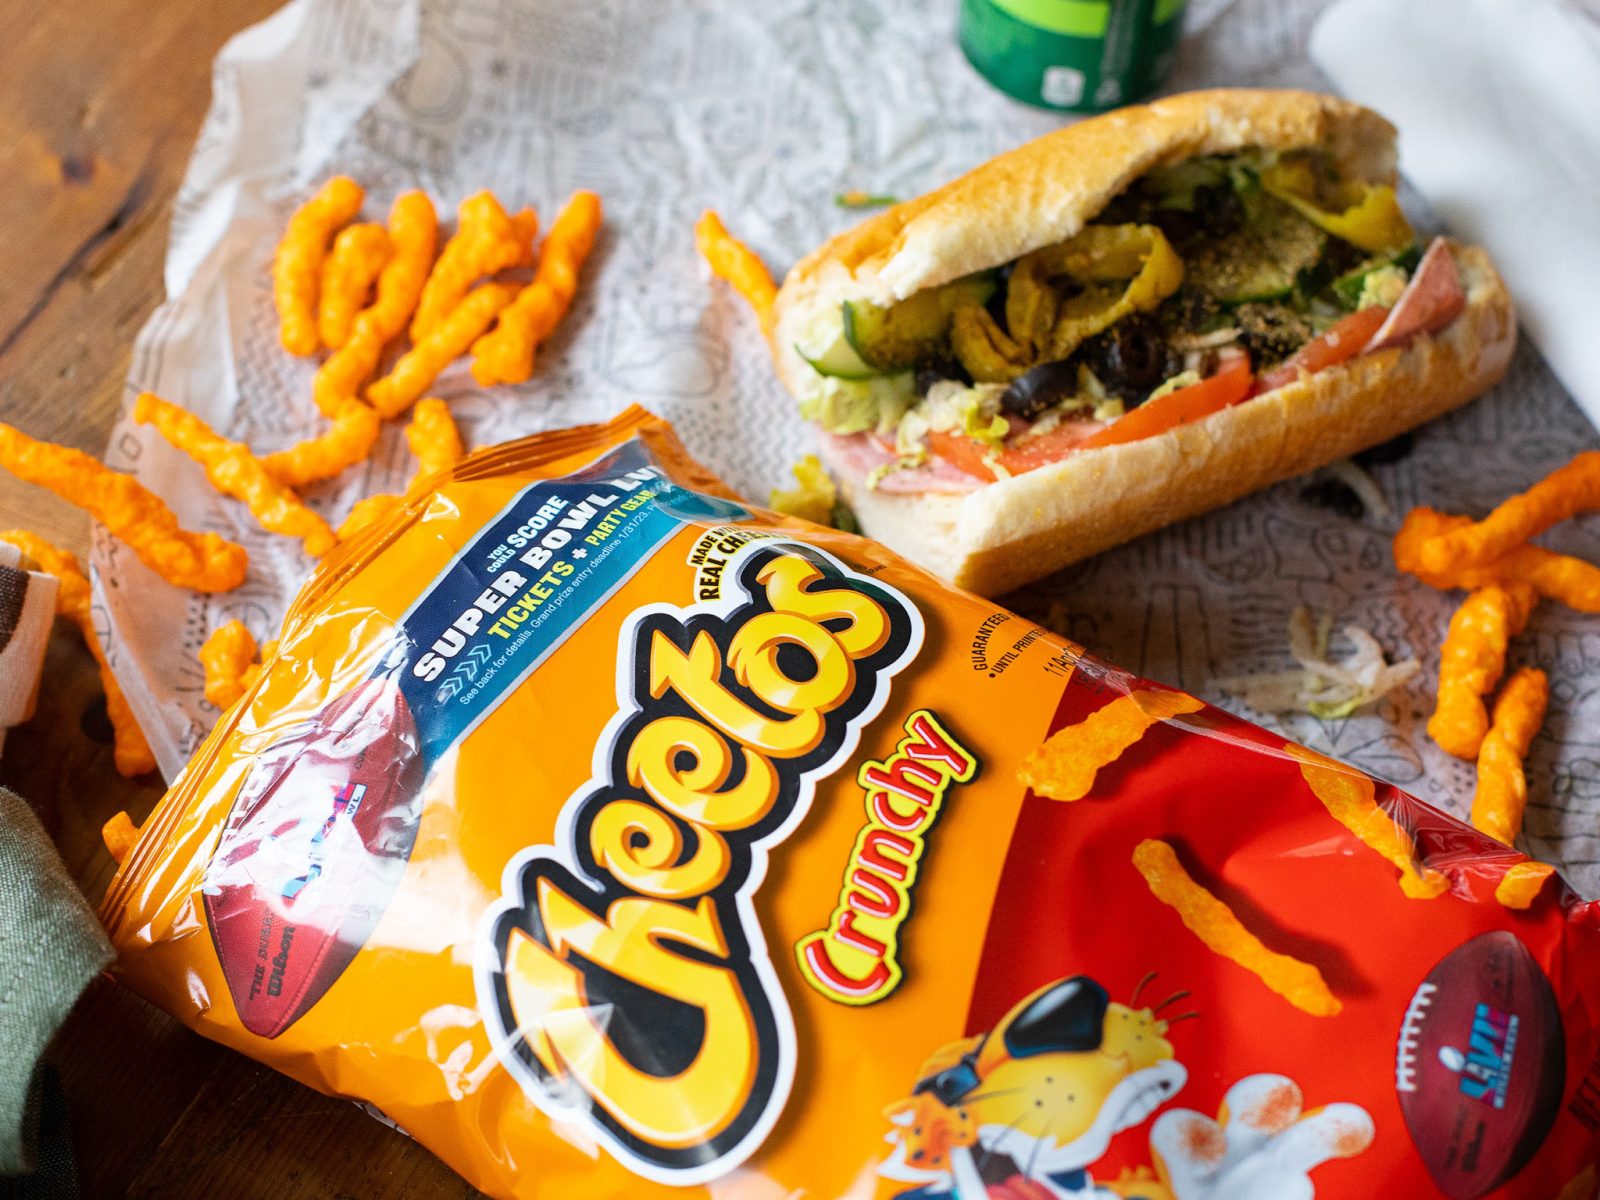 Get Cheetos As Low As $1.49 Per Bag At Kroger